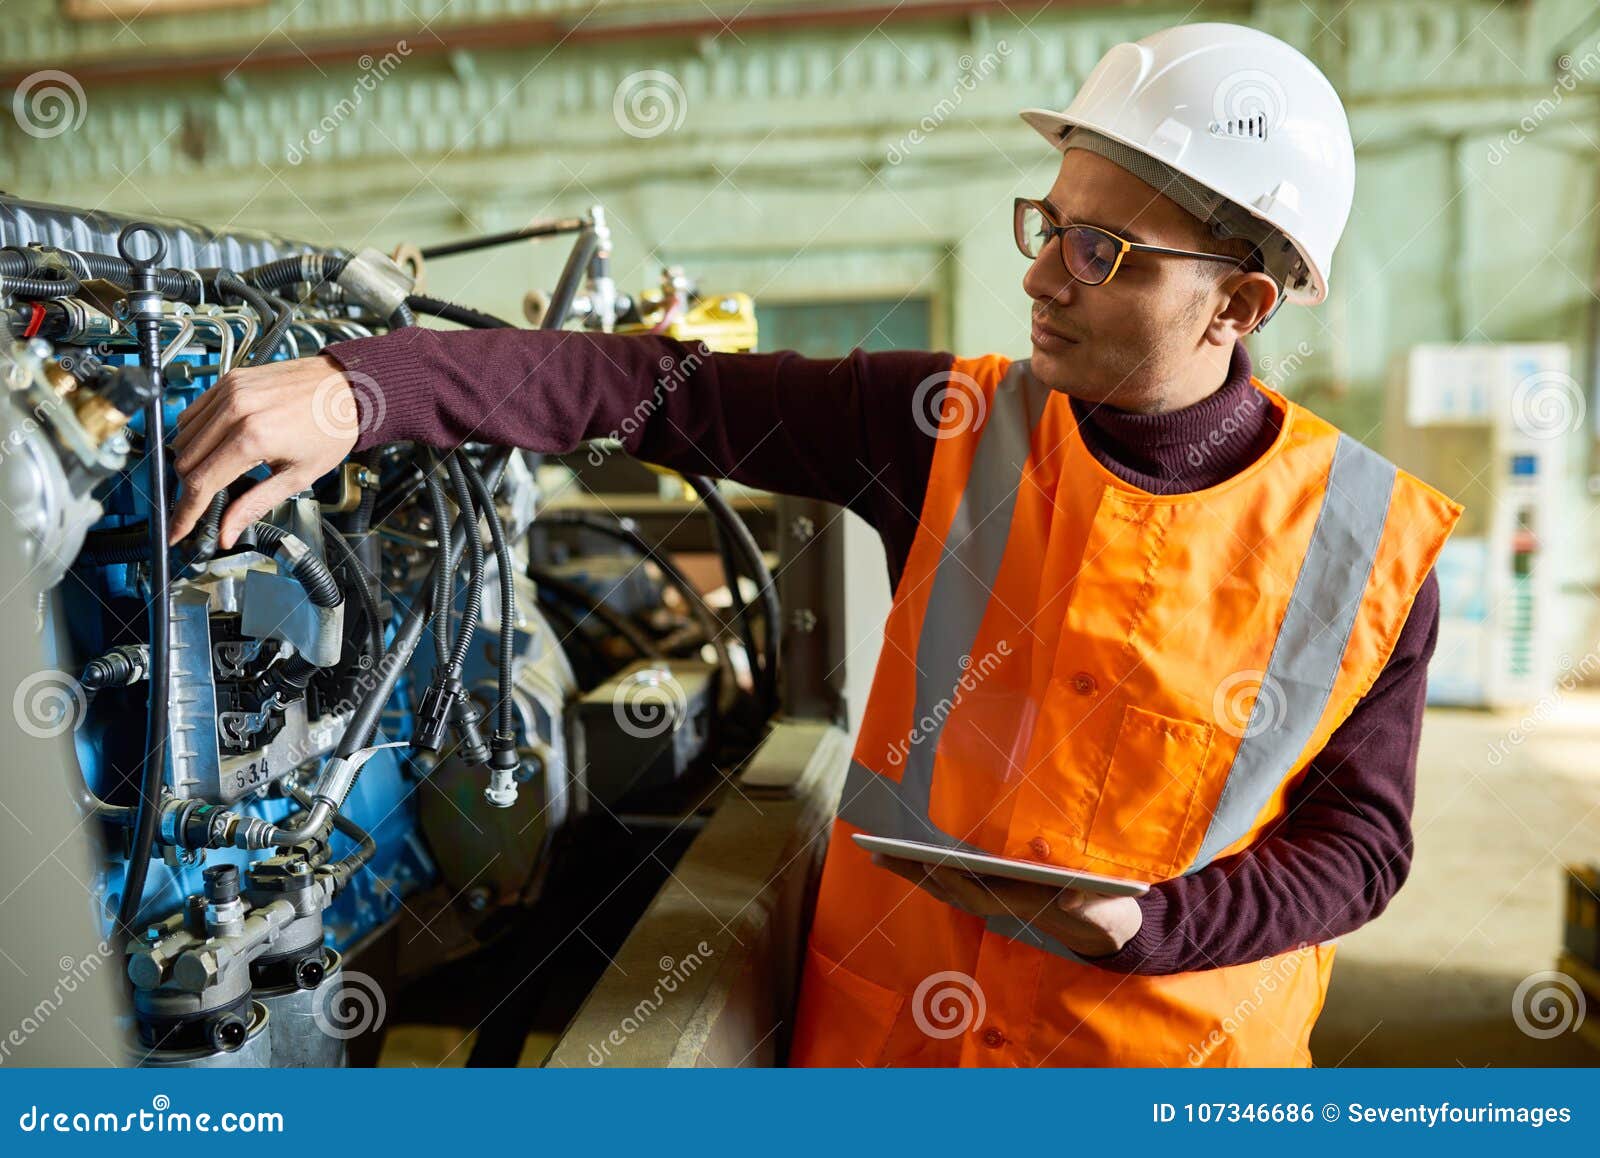 handsome technician adjusting engine features